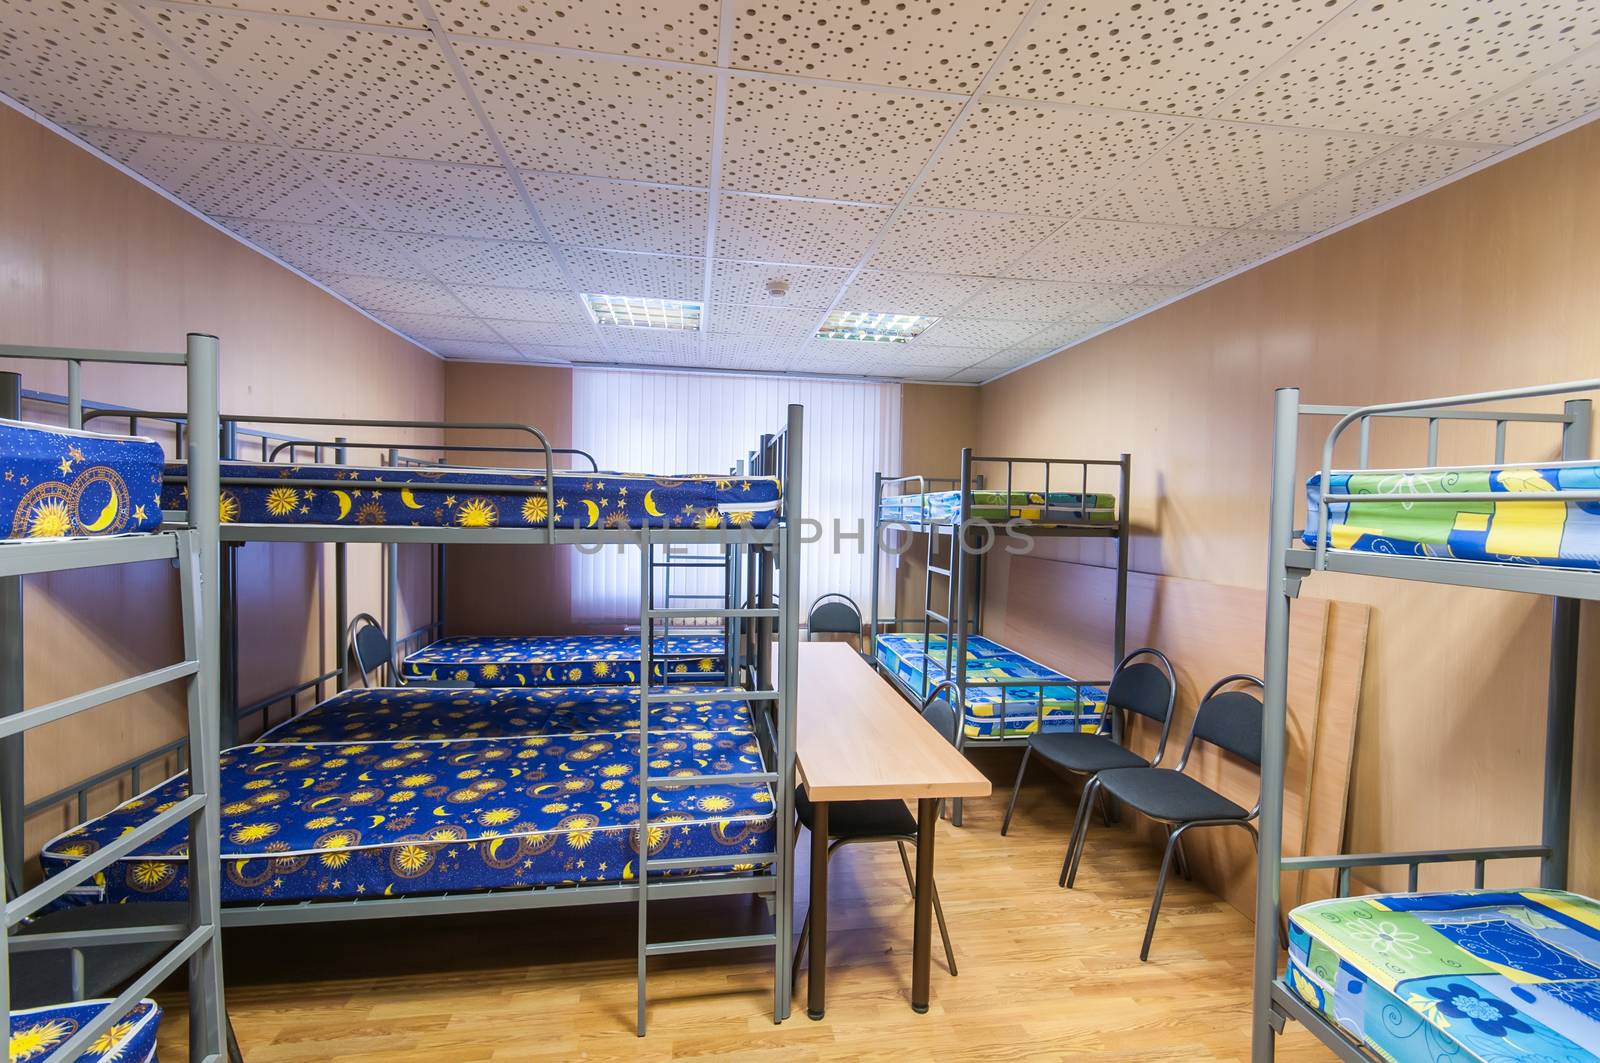 bunk metal beds in clean hostel room